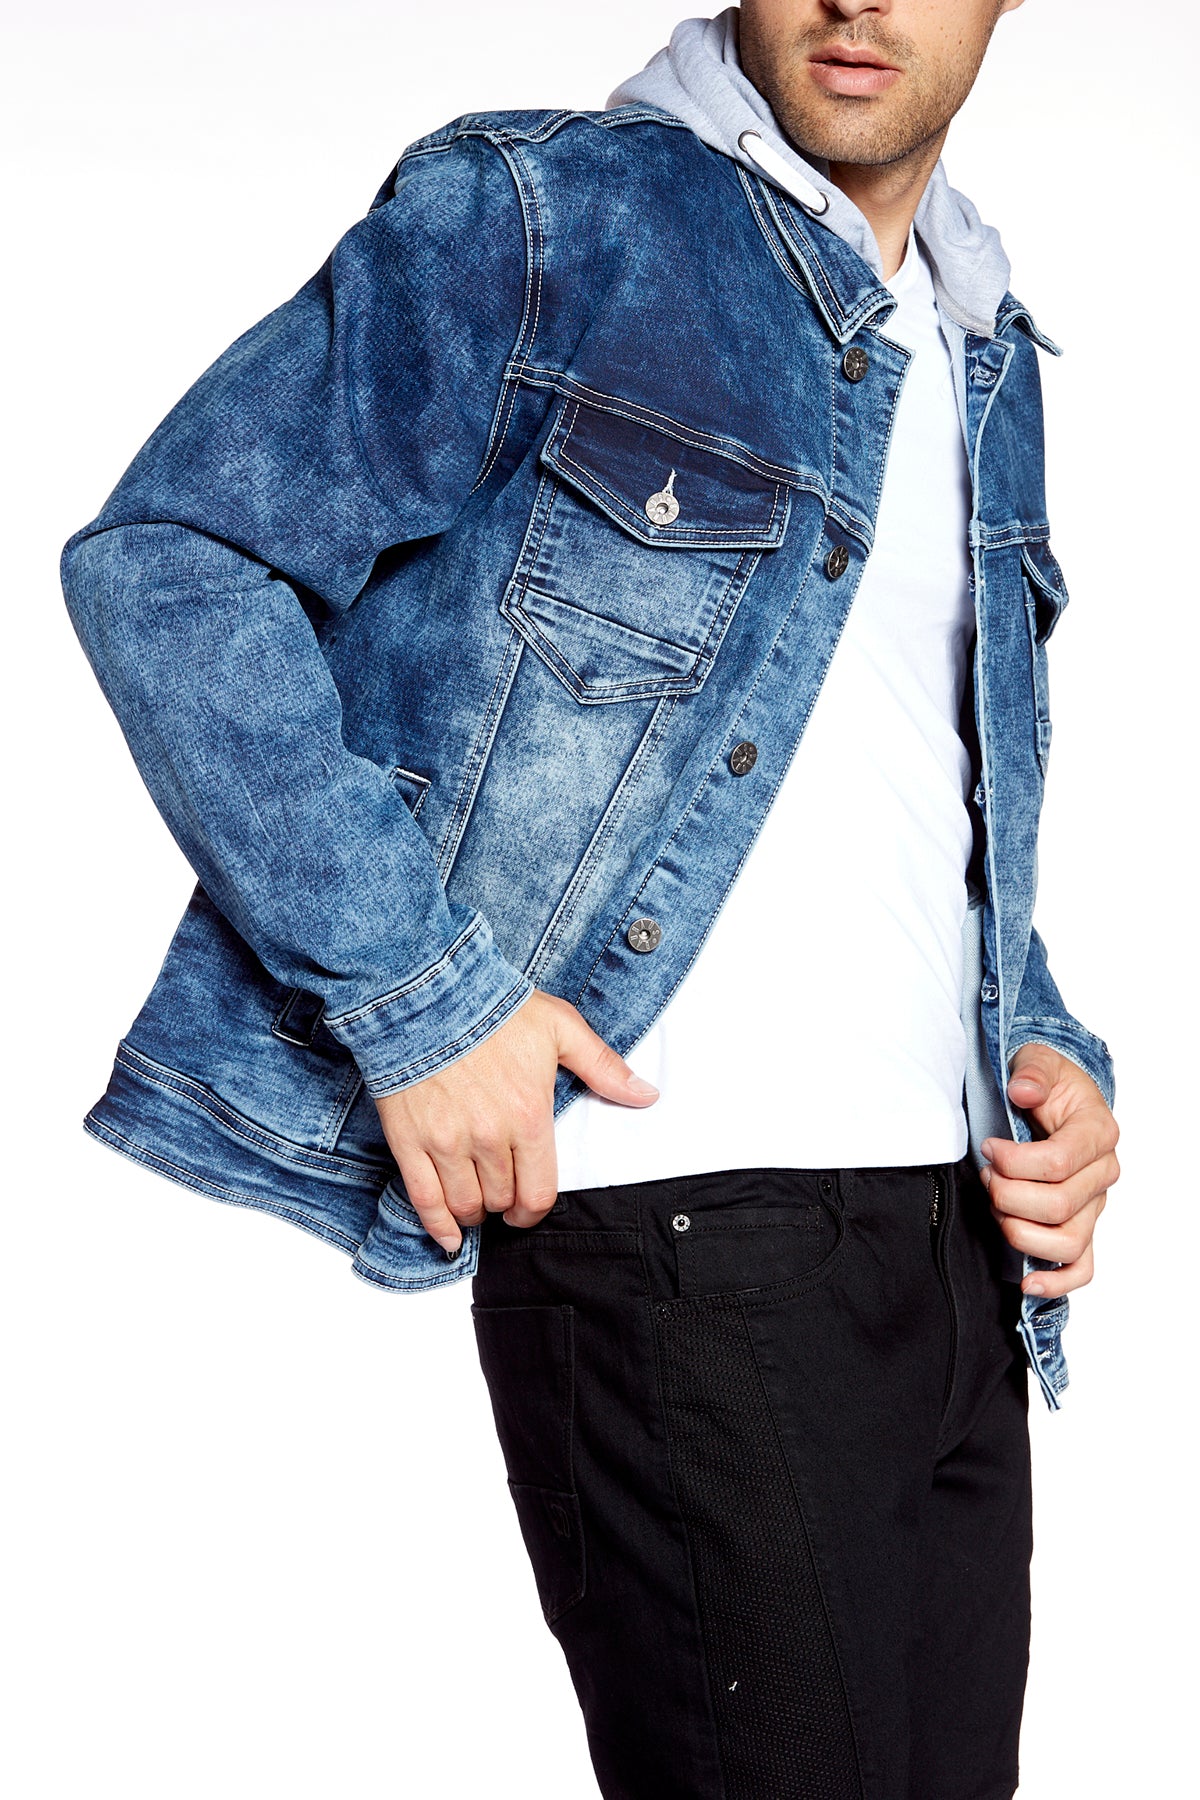 Men's Denim Jacket With Built-In Hood - Medium Blue Acid Wash - DENIM SOCIETY™